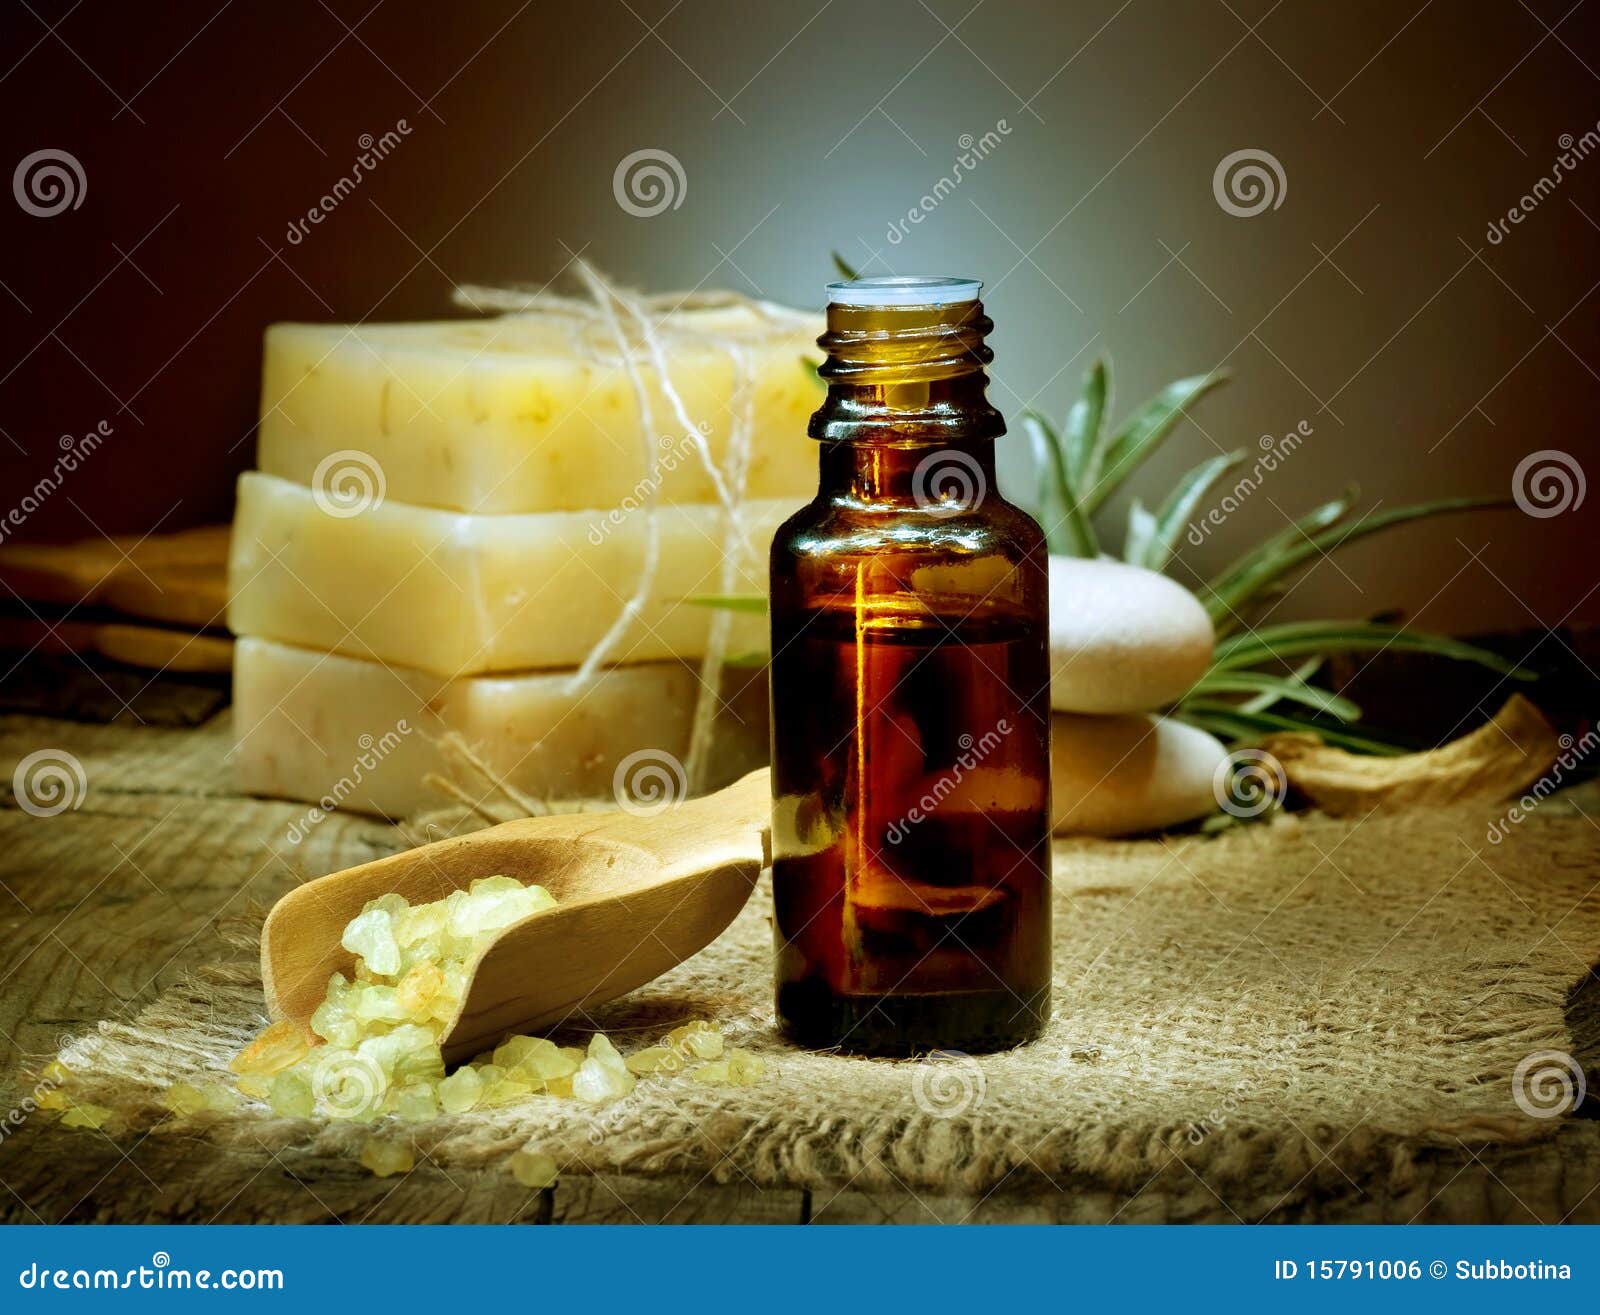 aromatherapy.essential oil